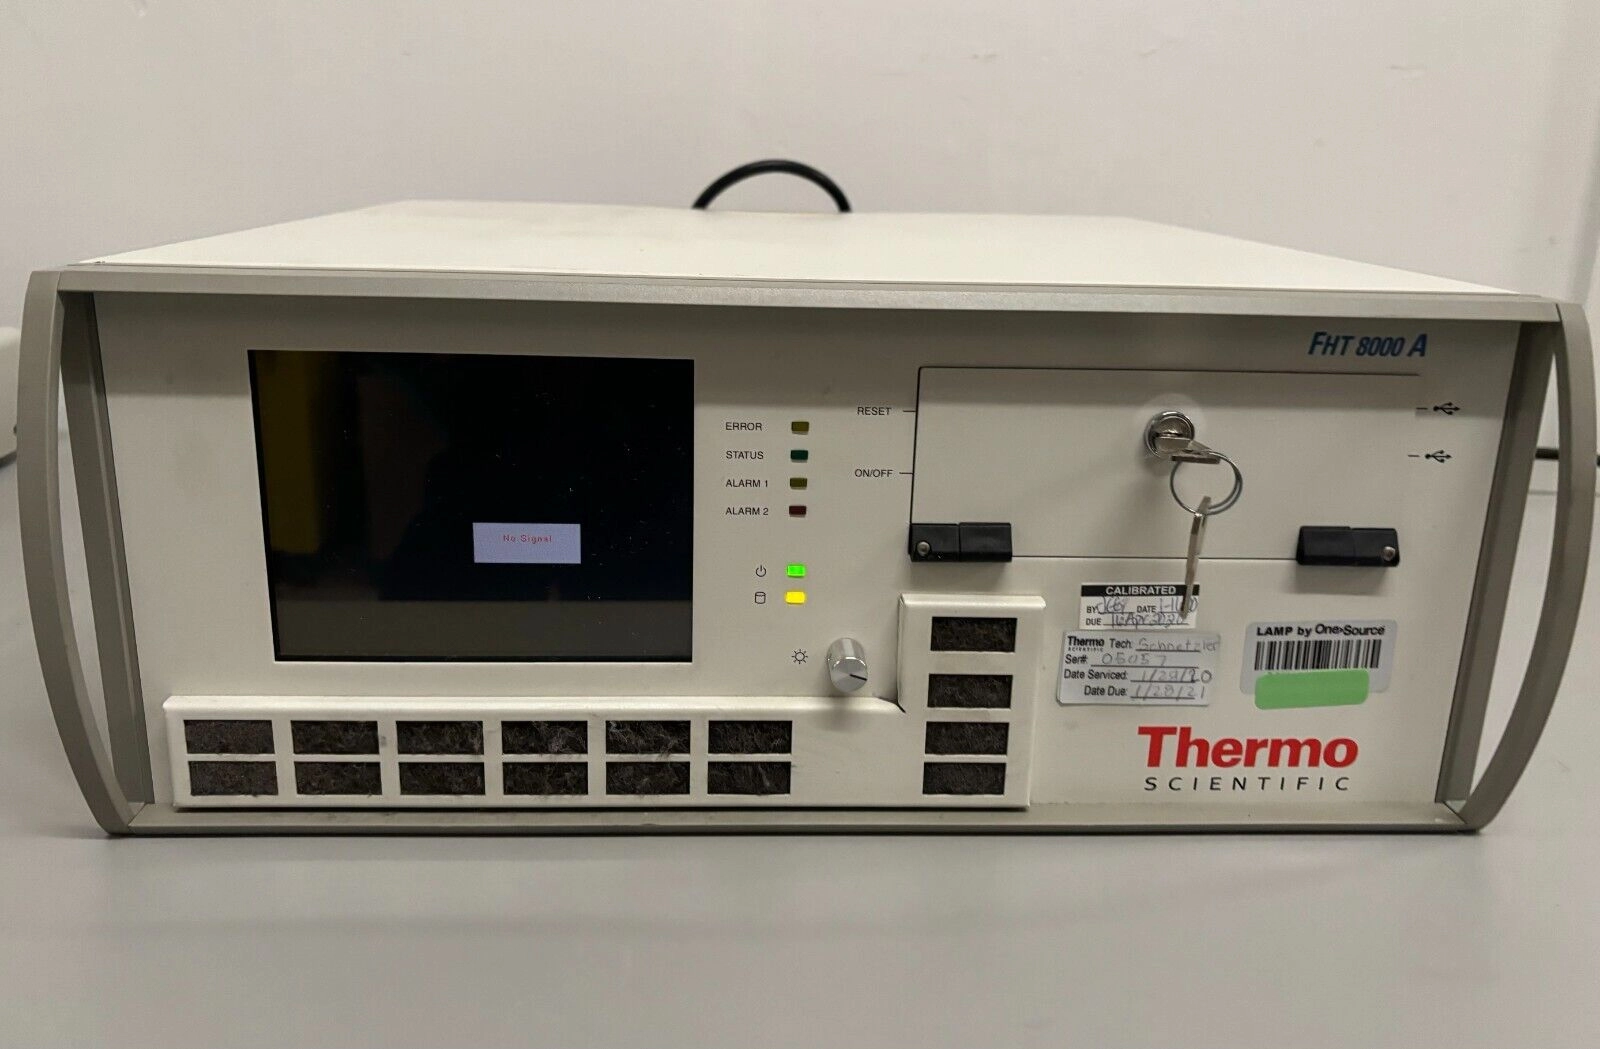 Thermo Scientific FHT 8000 A Analyzer